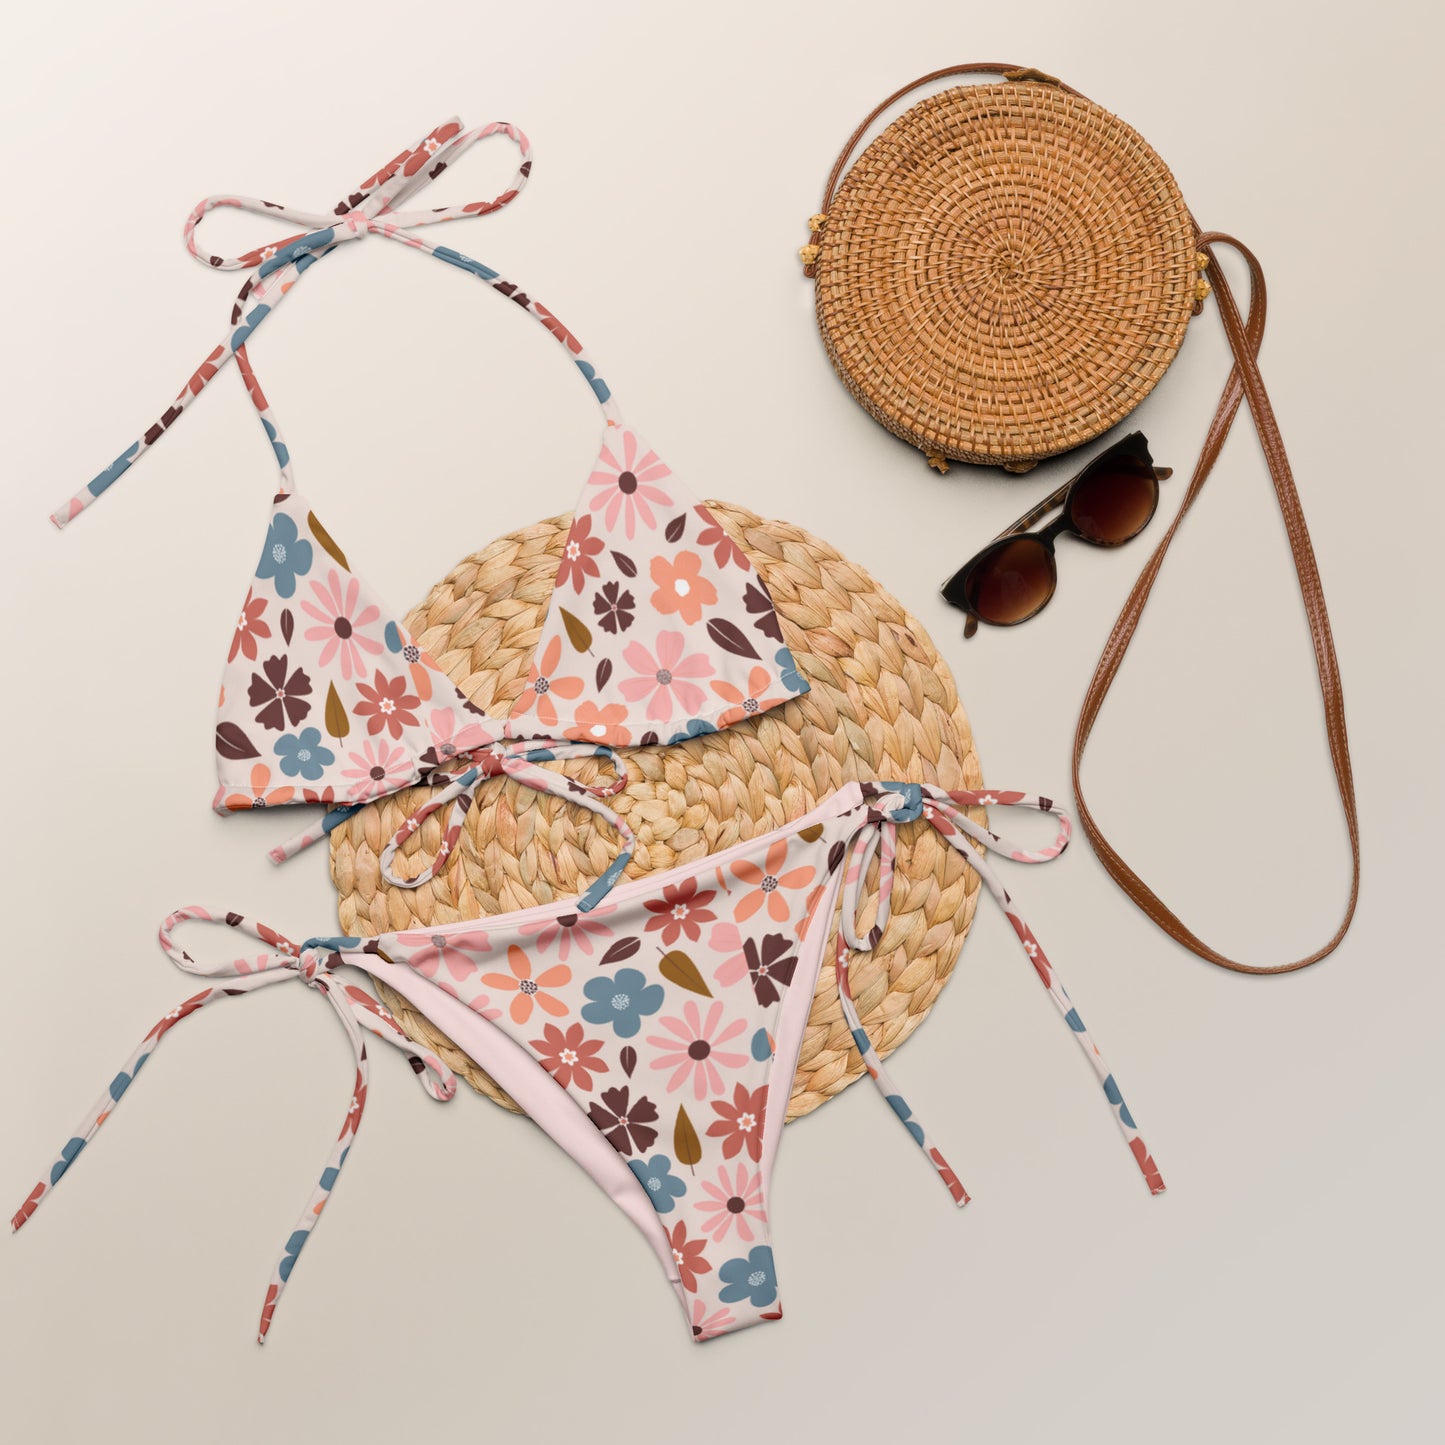 String Bikini (Glamourange Women Swimwear By Patterns - 0012 Model)